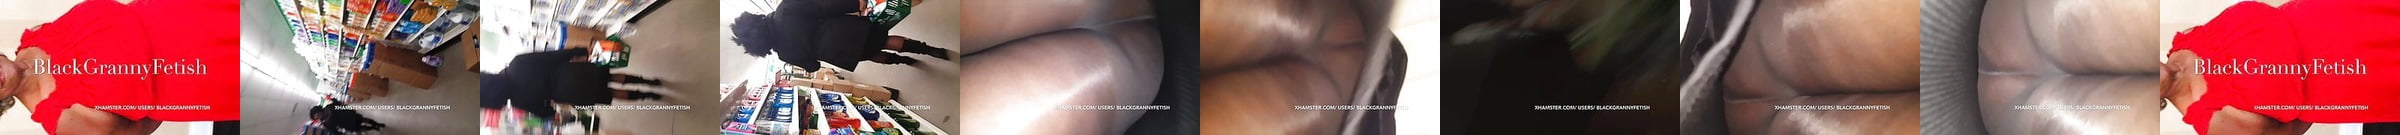 Featured Black Ebony Mature Granny Porn Videos XHamster